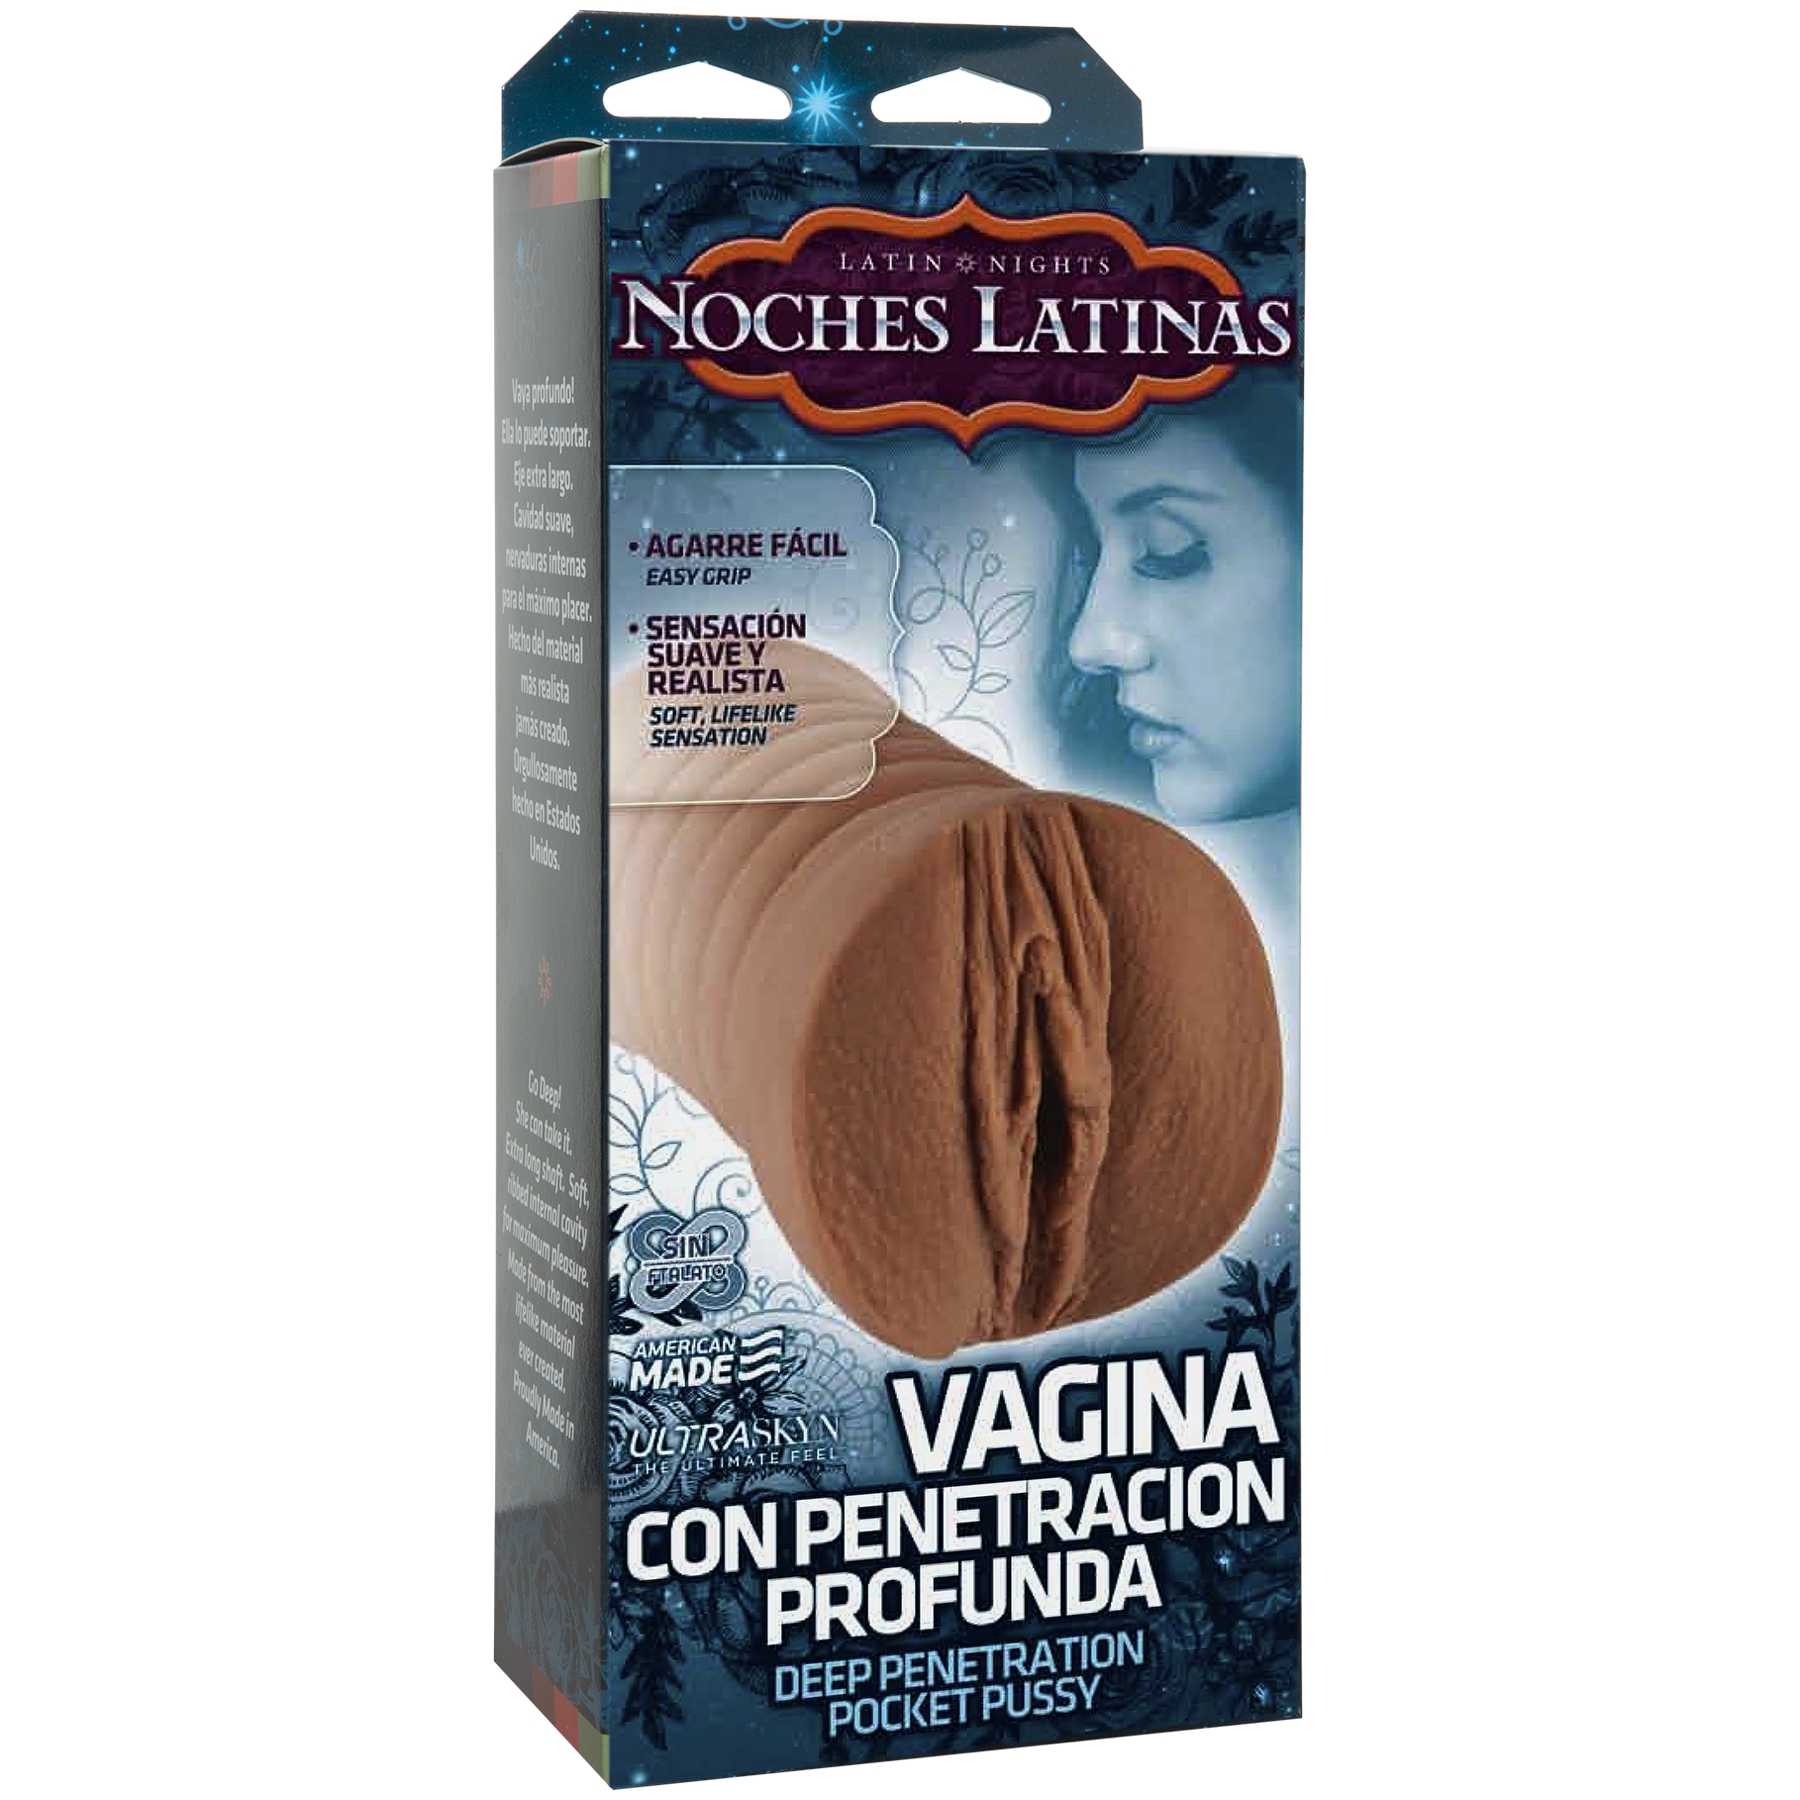 Doc Johnson Noches Latinas UR3 Vagina Con Penetraction Profunda - Pussy